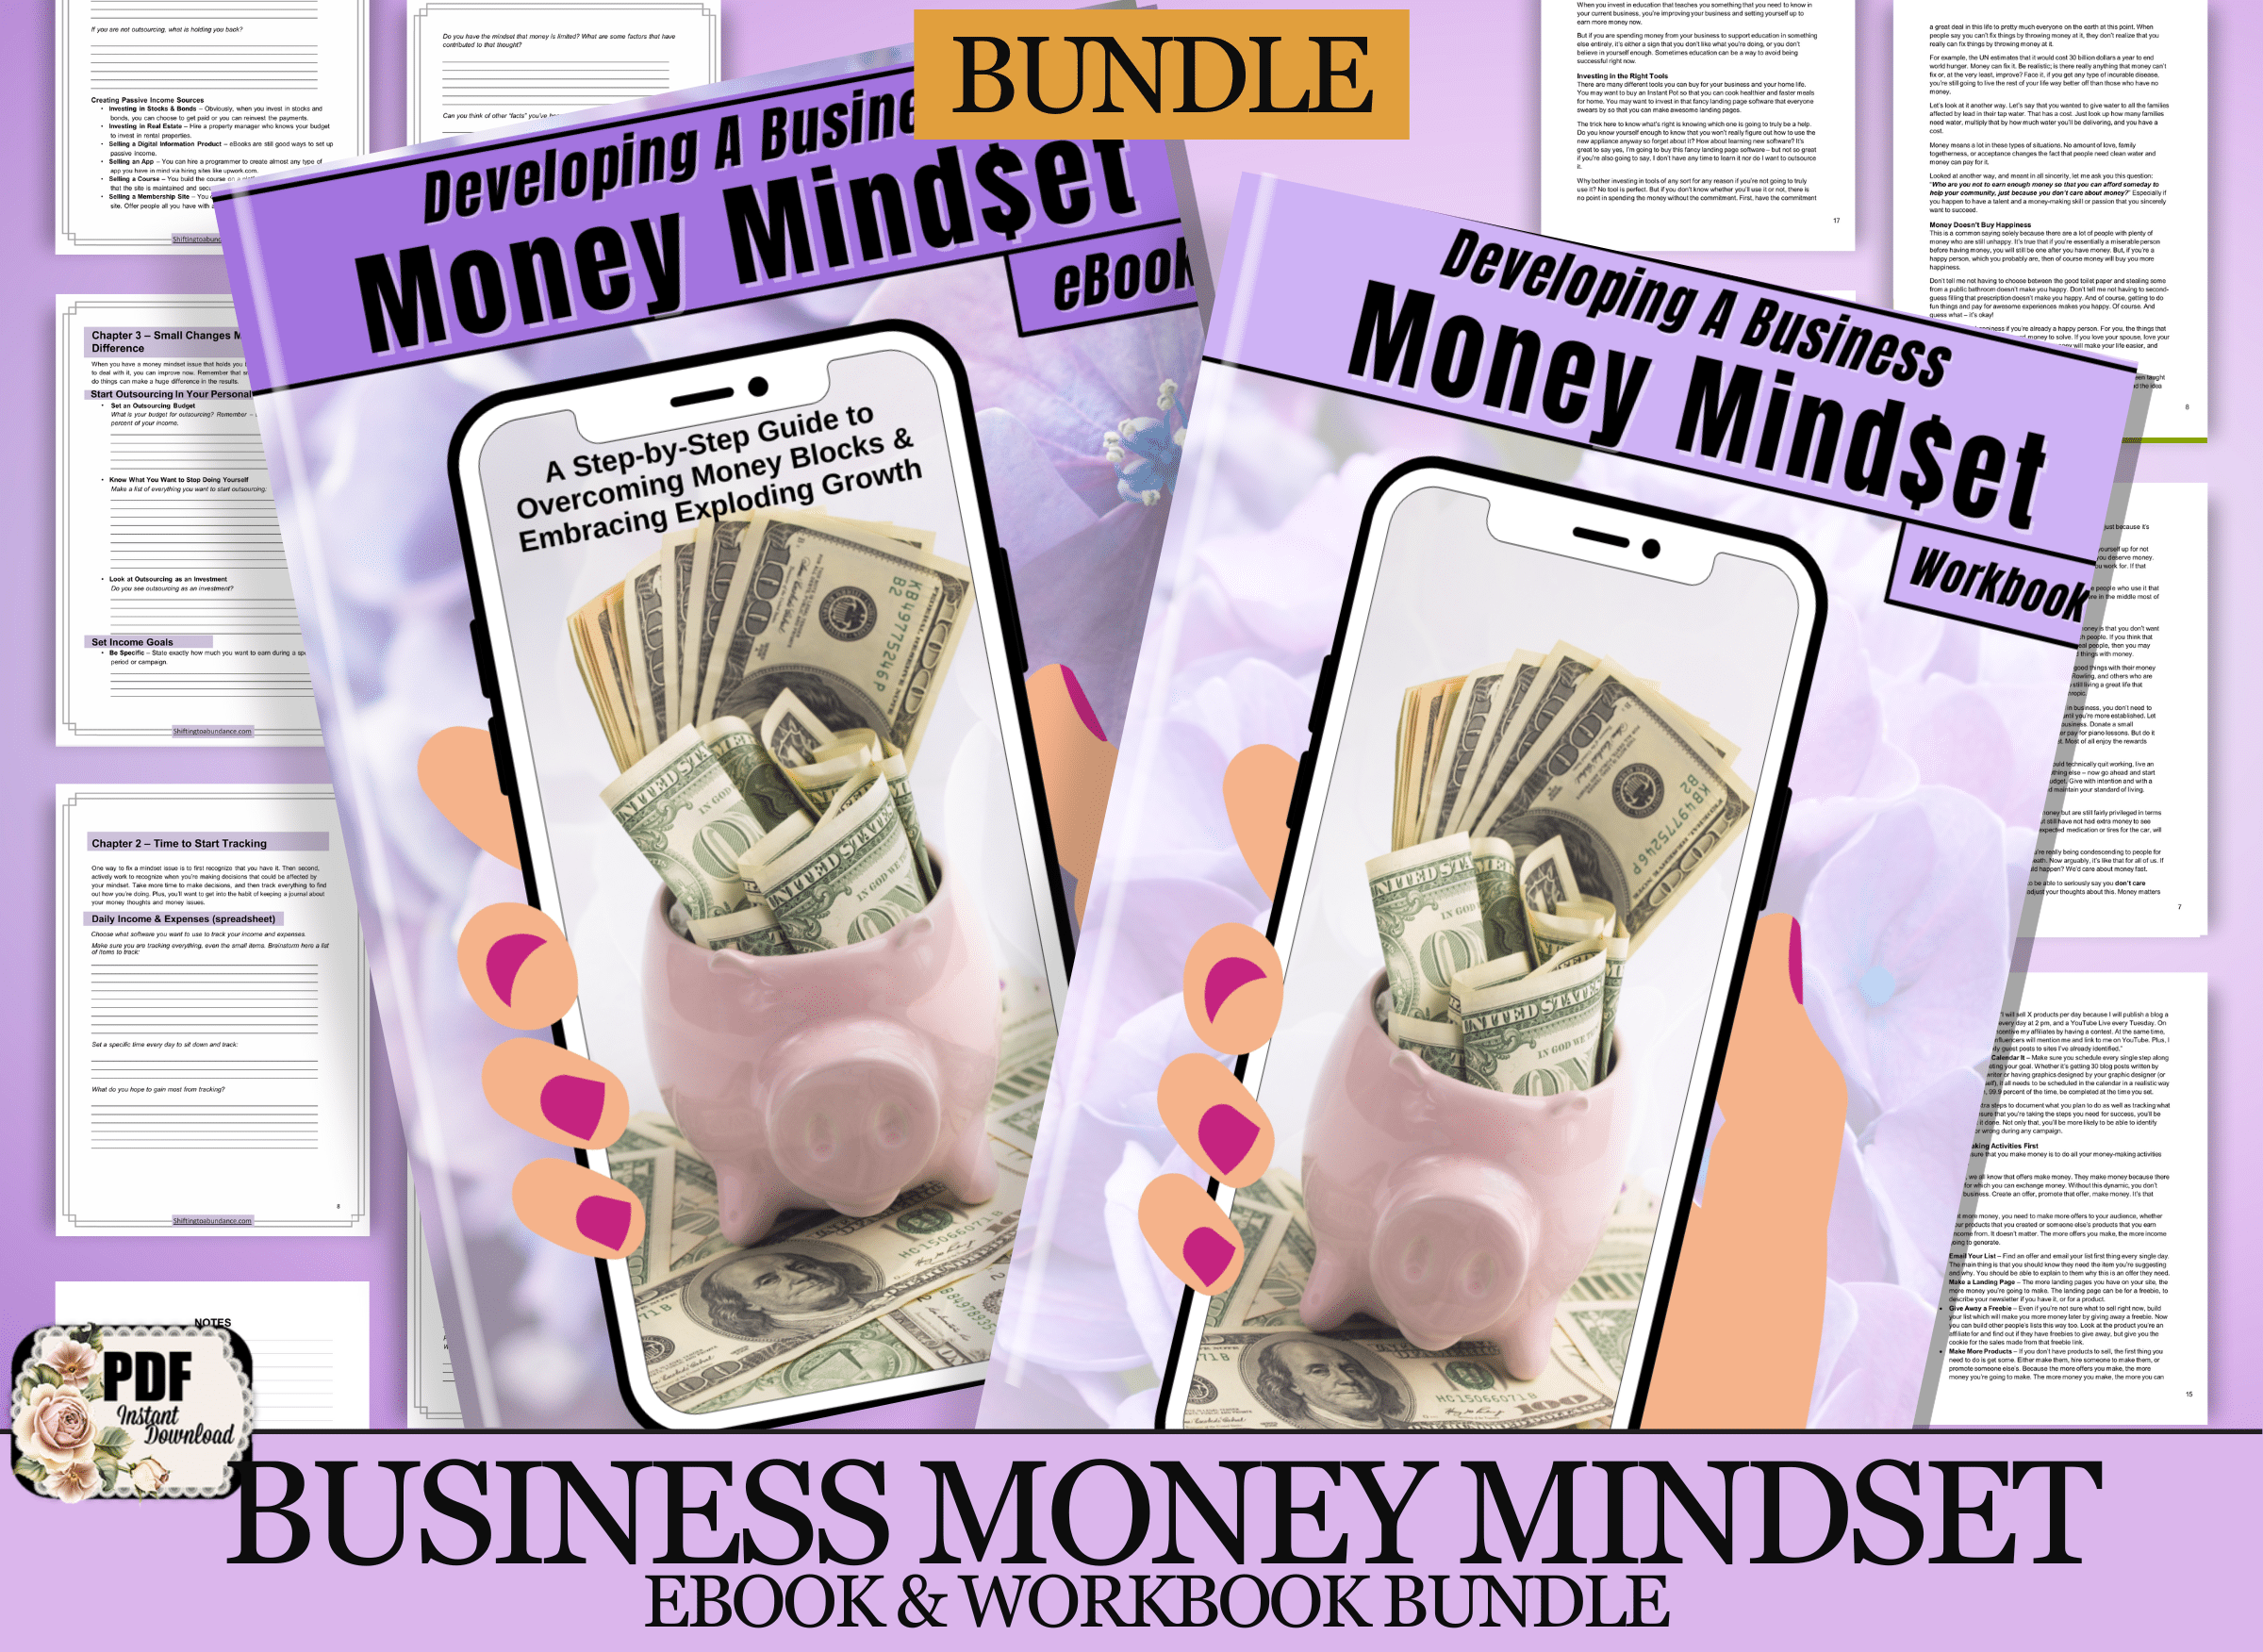 DEVELOPING A BUSINESS MONEY MINDSET EBOOK & WORKBOOK BUNDLE